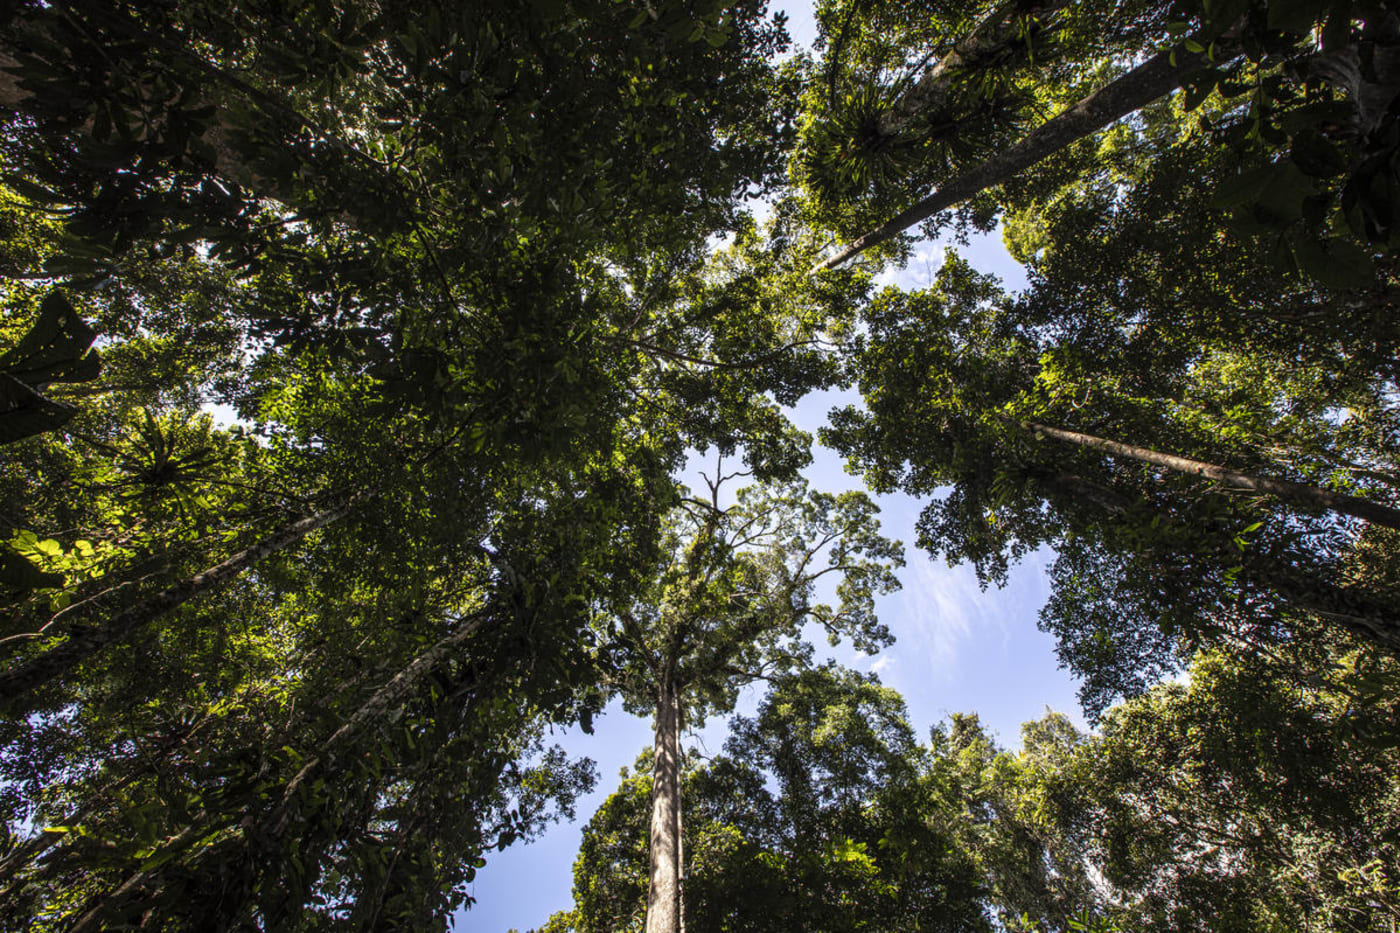 Tree canopy in Tawau Hills Park in Sabah, Borneo, Malaysia